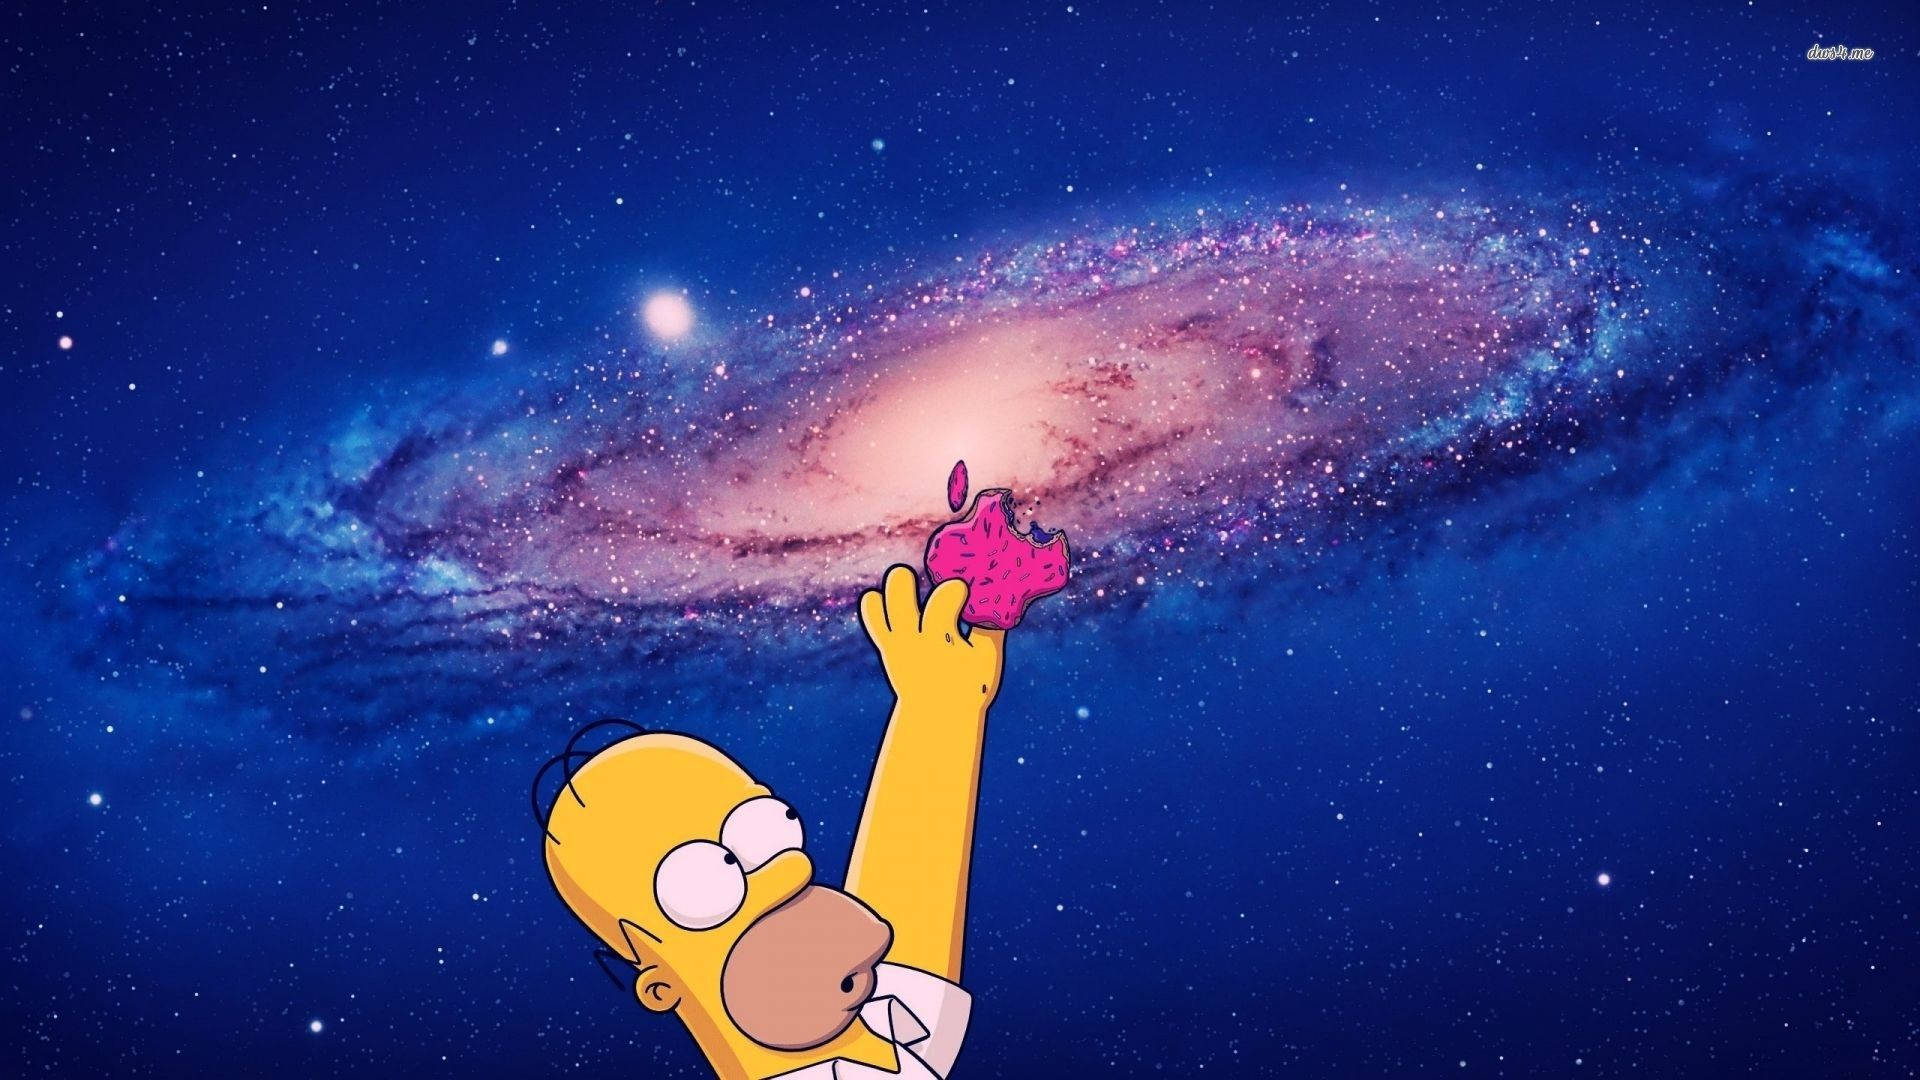 Homer Simpson - "D'oh!" Wallpaper